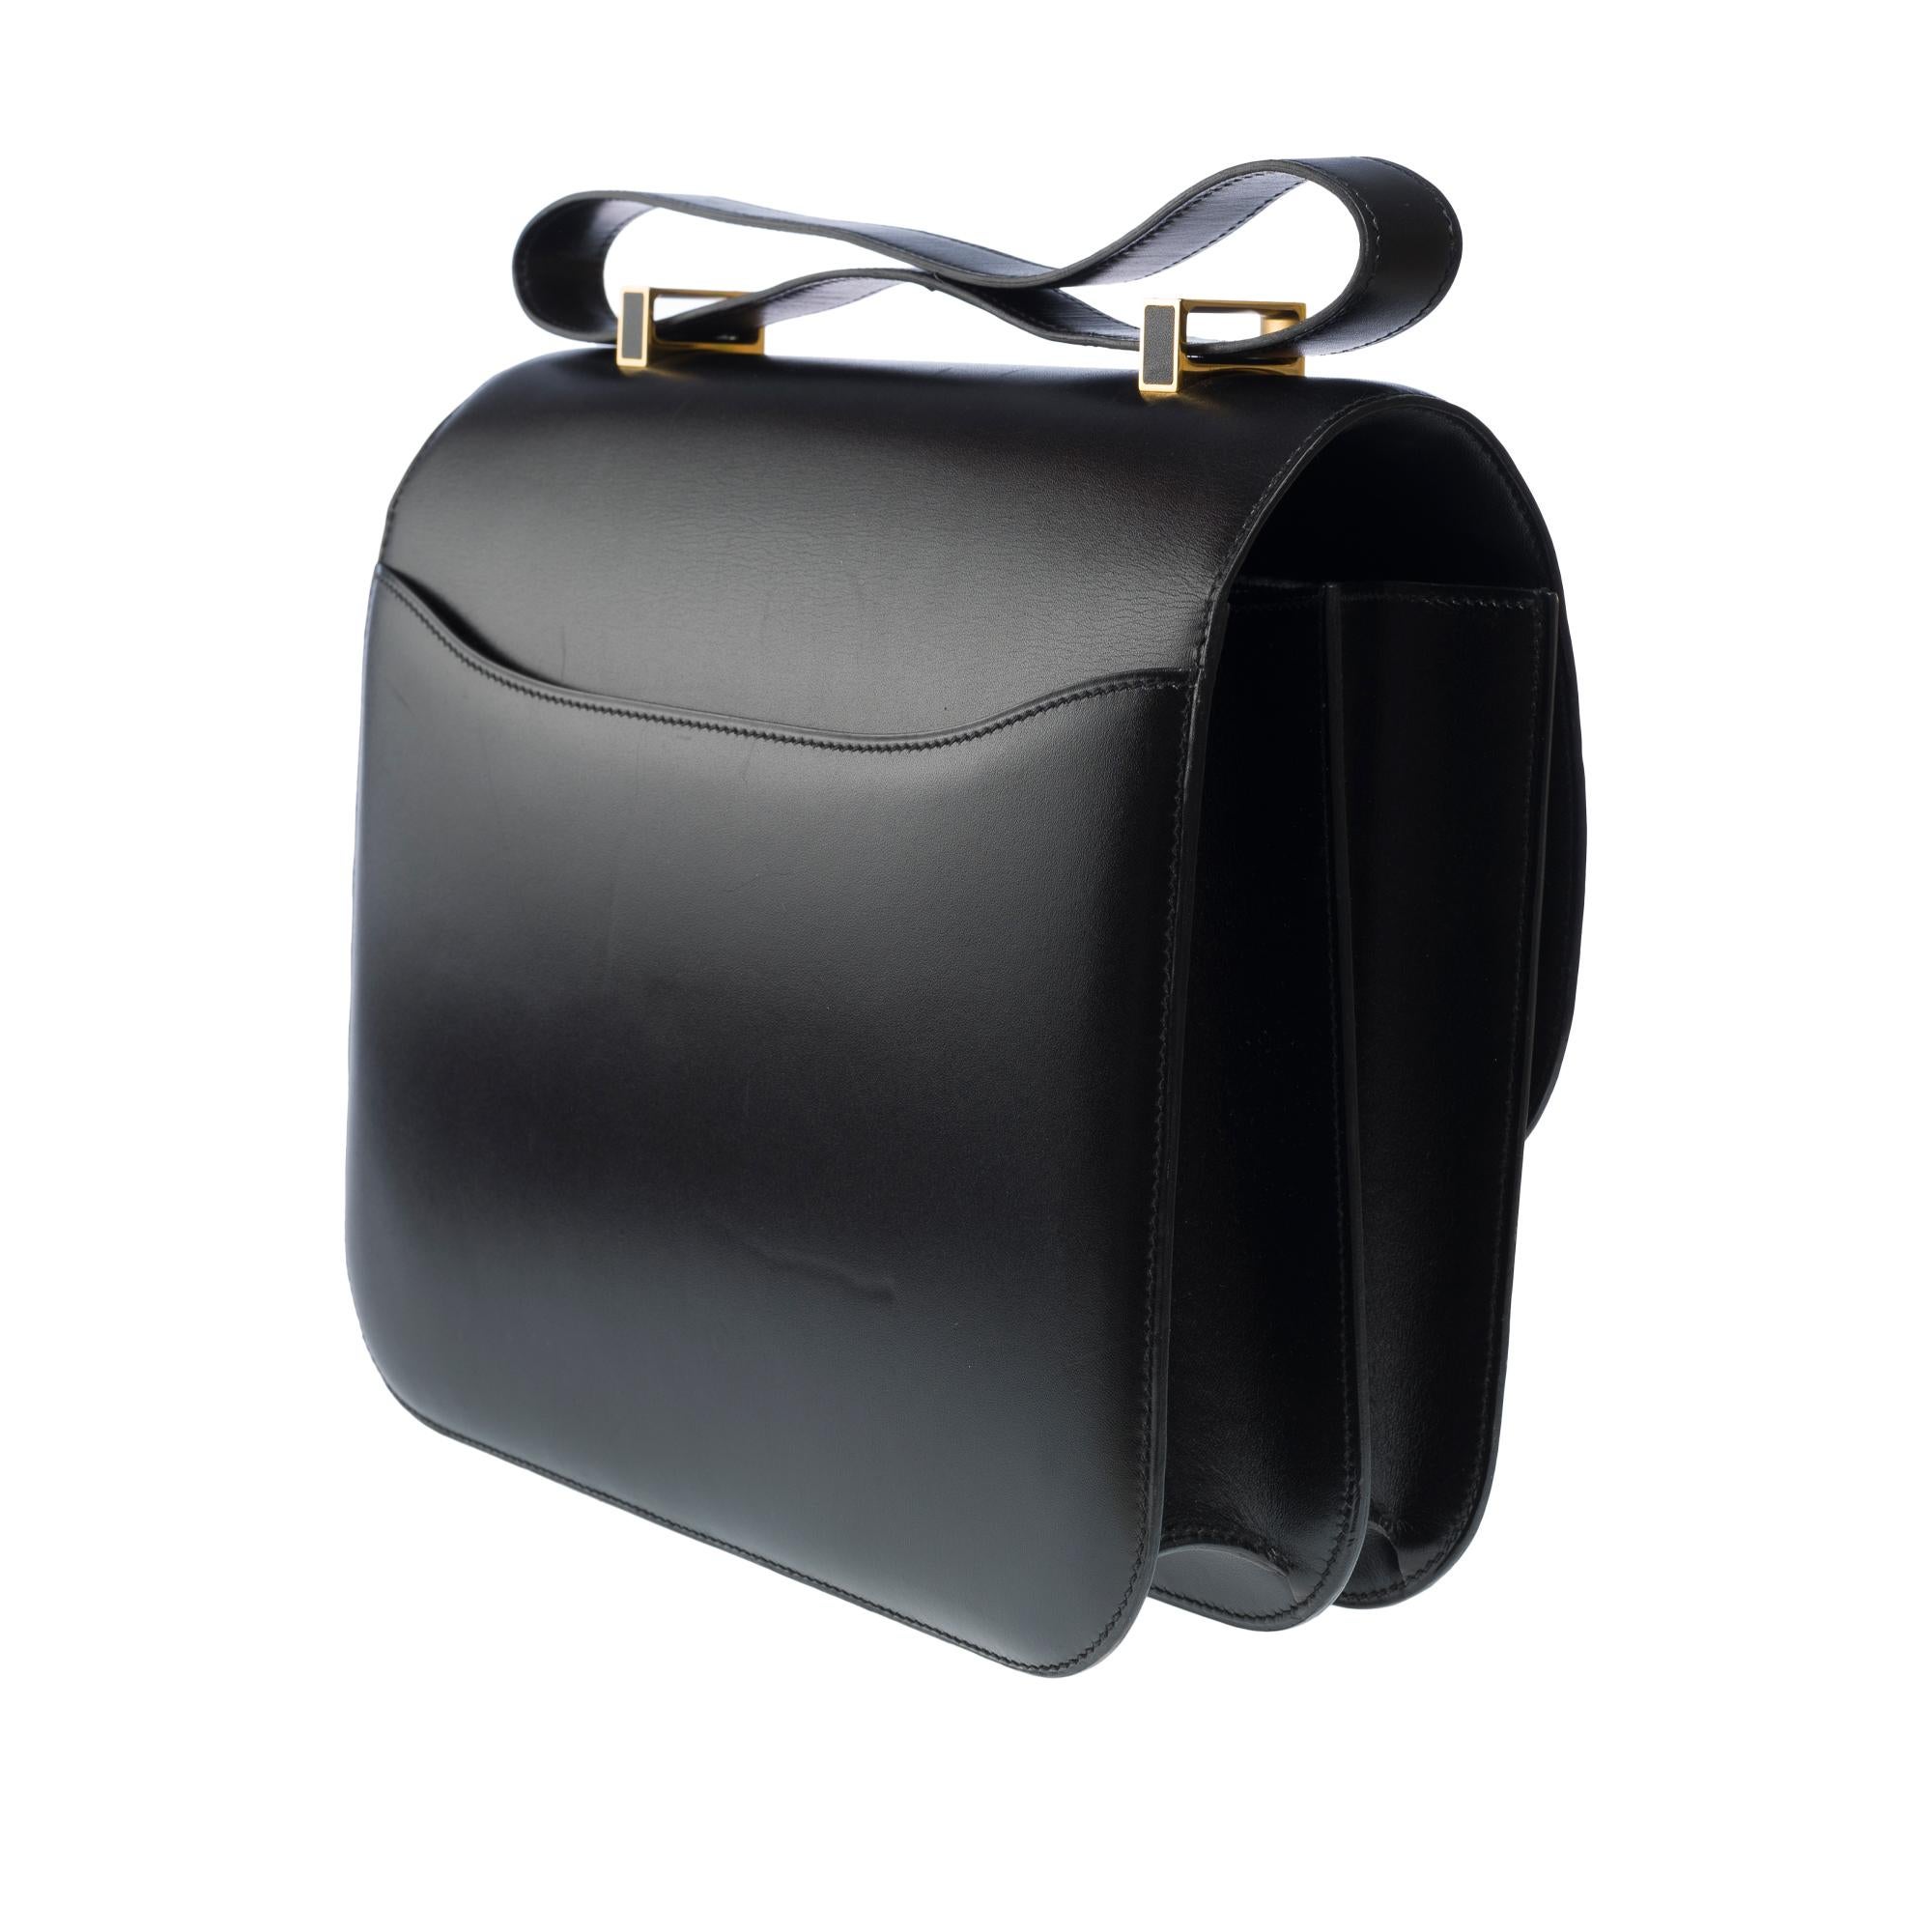  Rare Hermès Constance Cartable shoulder bag in Black Box Calf leather , GHW For Sale 2